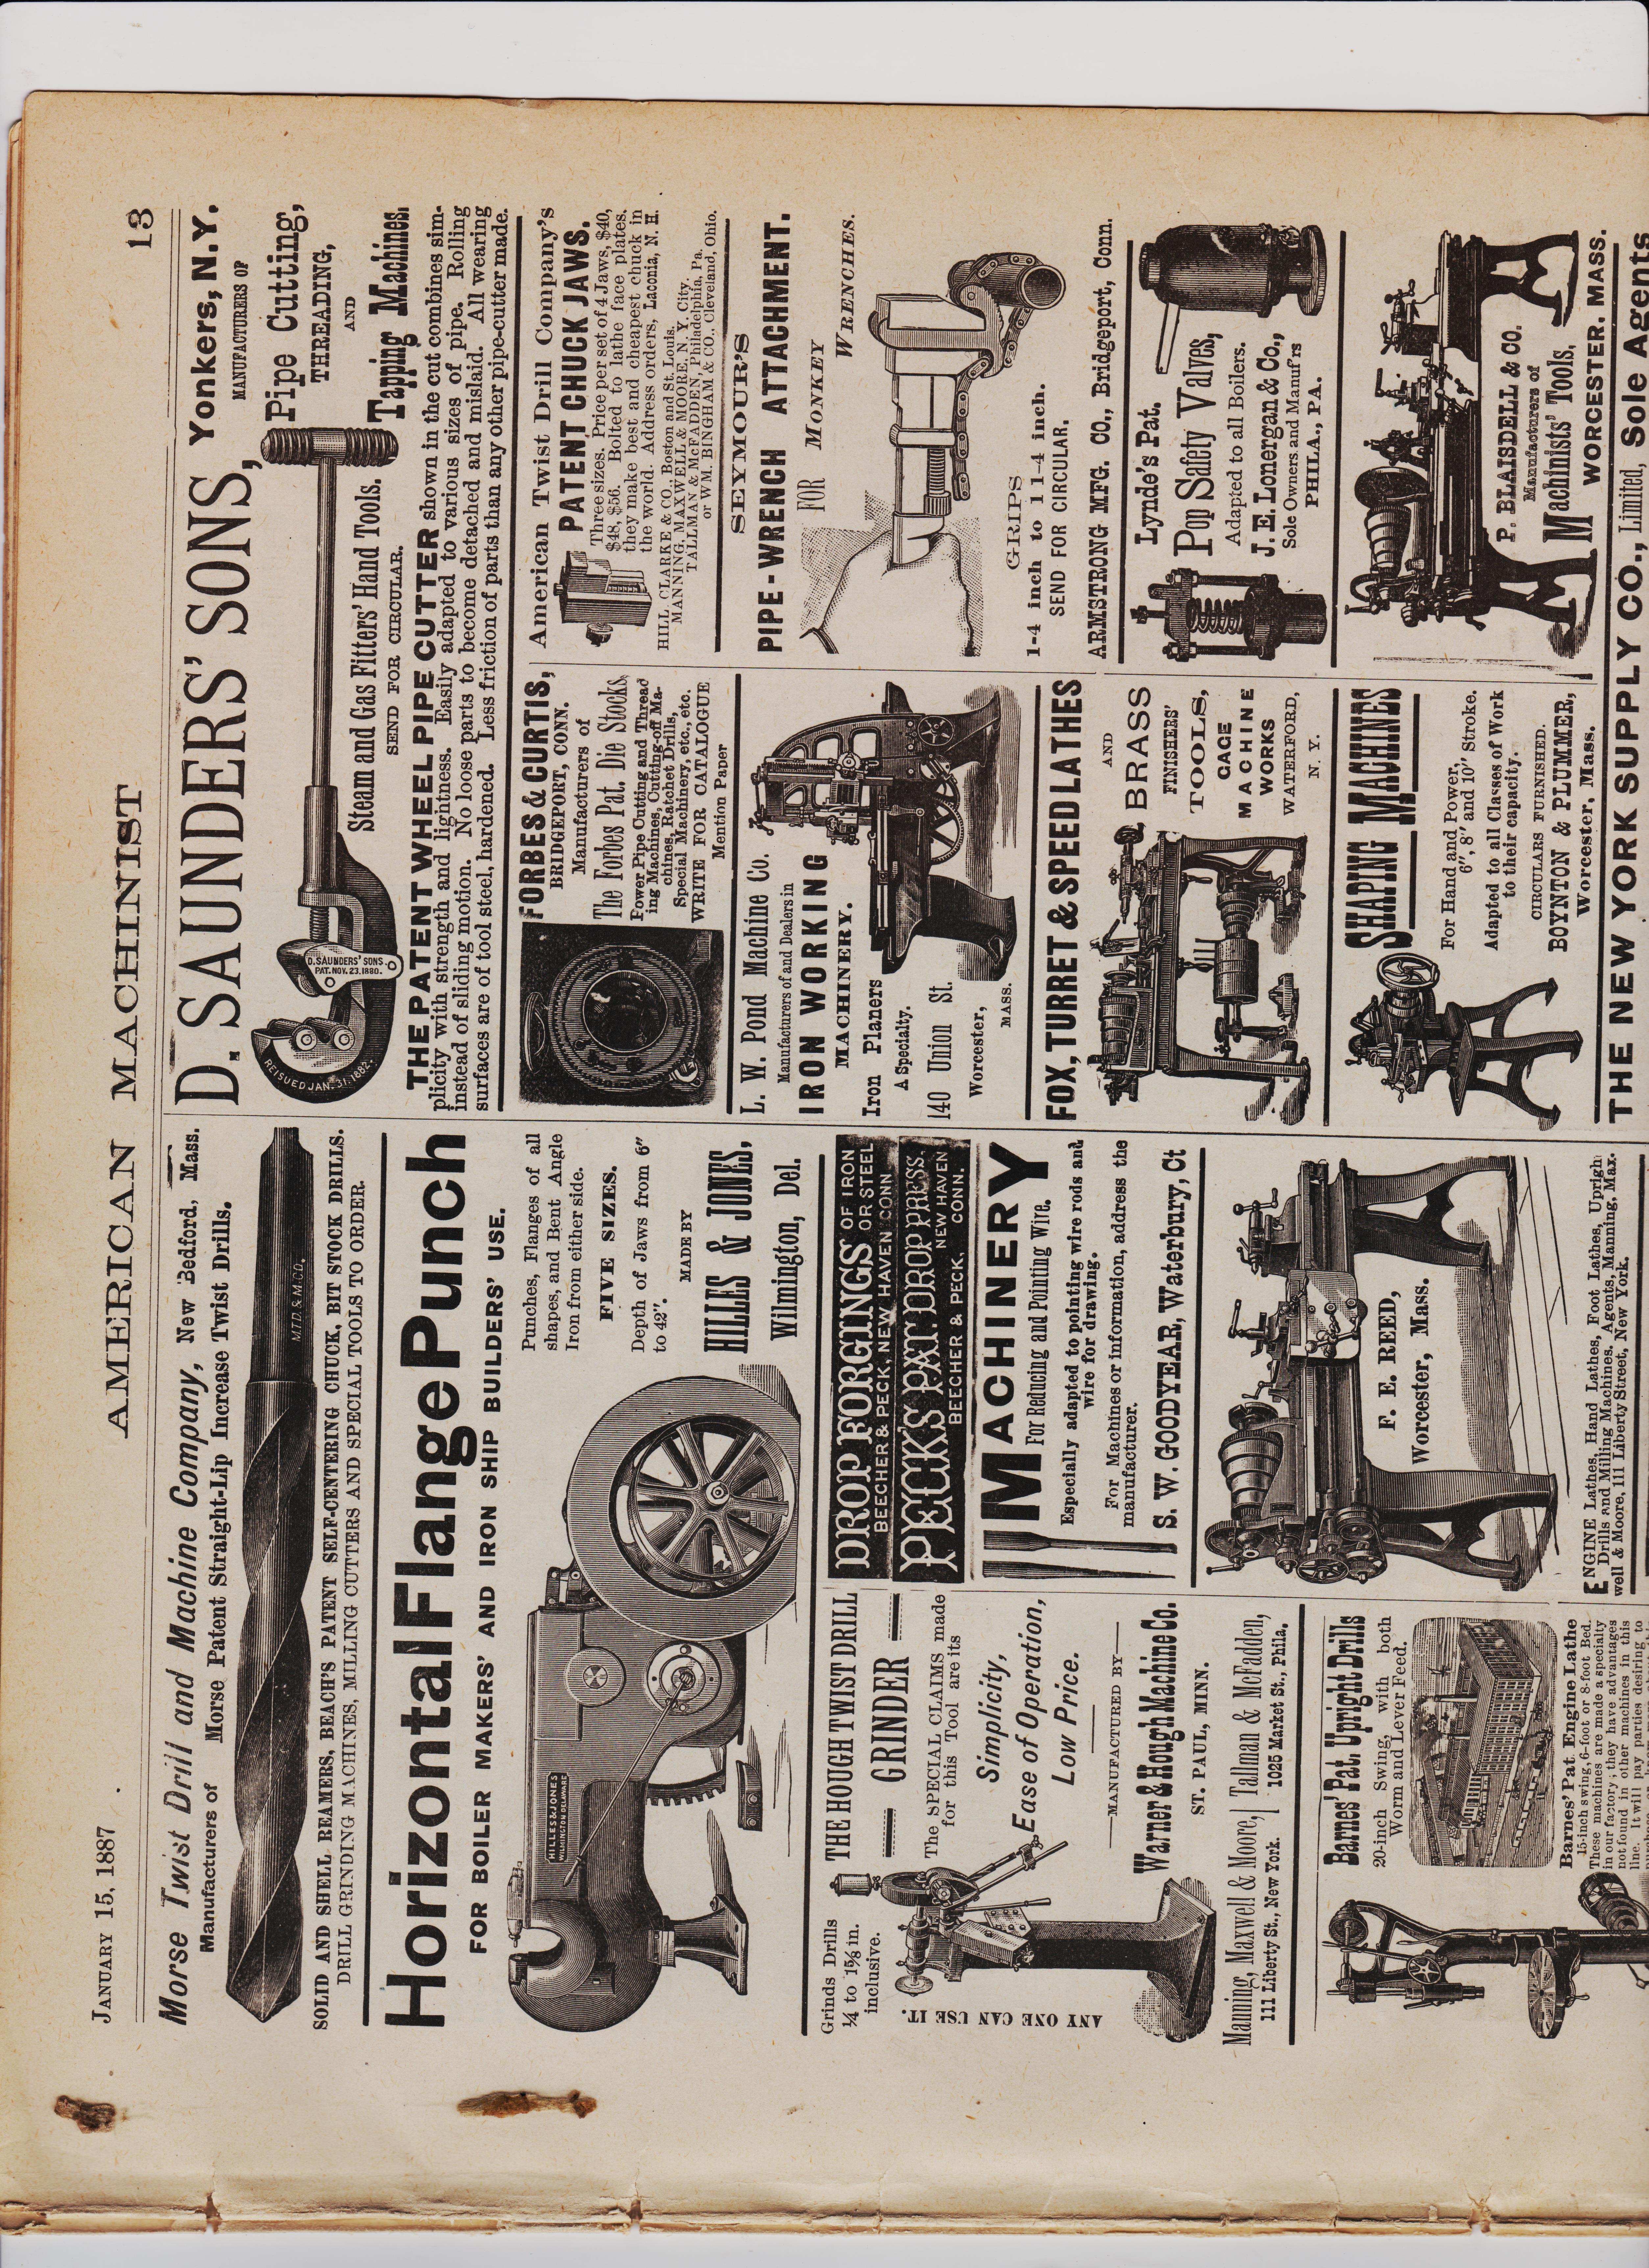 https://antiquemachinery.com/images-1887/1887-American-Machinist-1887-Dec-31-pg-15-top.jpeg